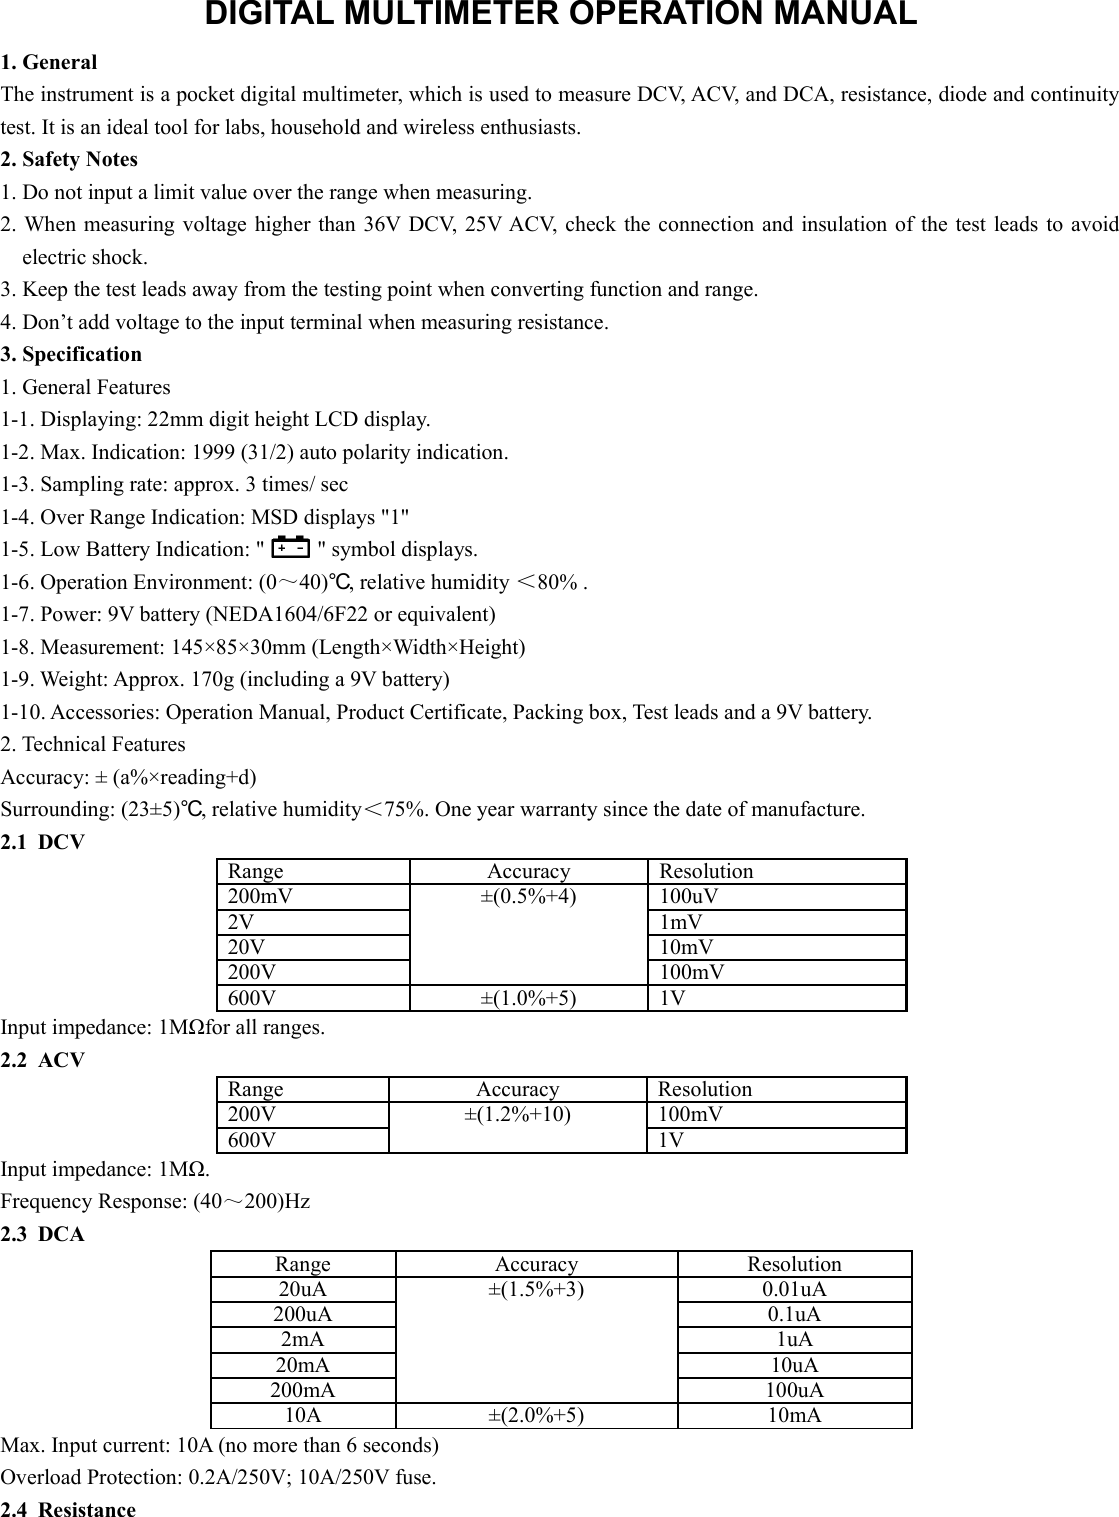 Page 1 of 3 - VICTOR 830L DIGITAL MULTIMETER 100409 - VC830L Manual